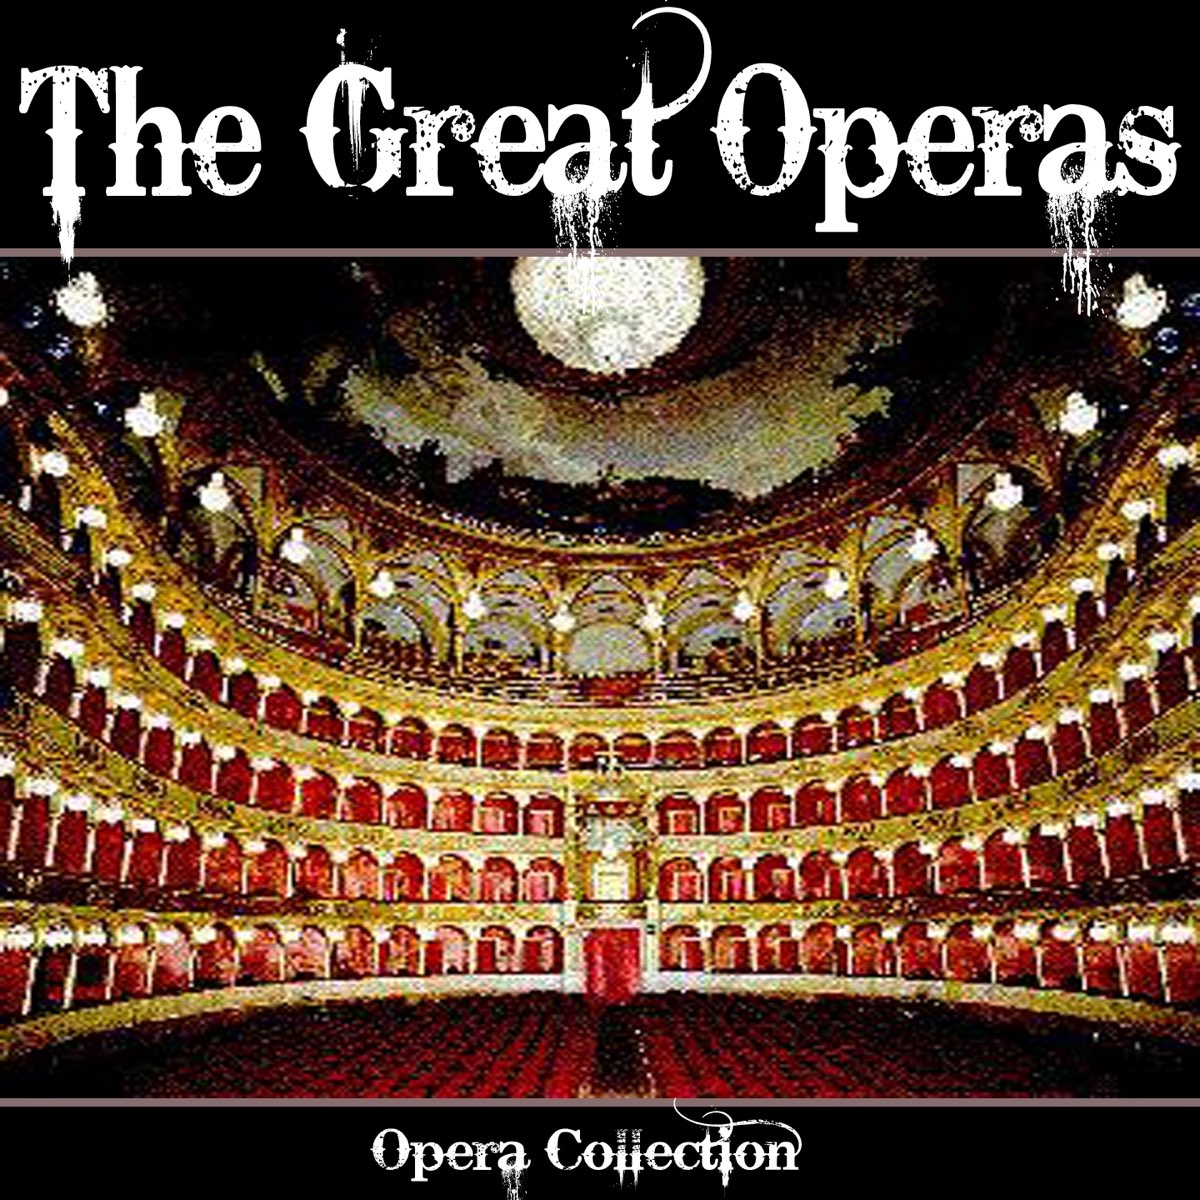 Metropolitan orchestra. Opera collection. 100 Best Opera Classics. Essential Opera collection 50.